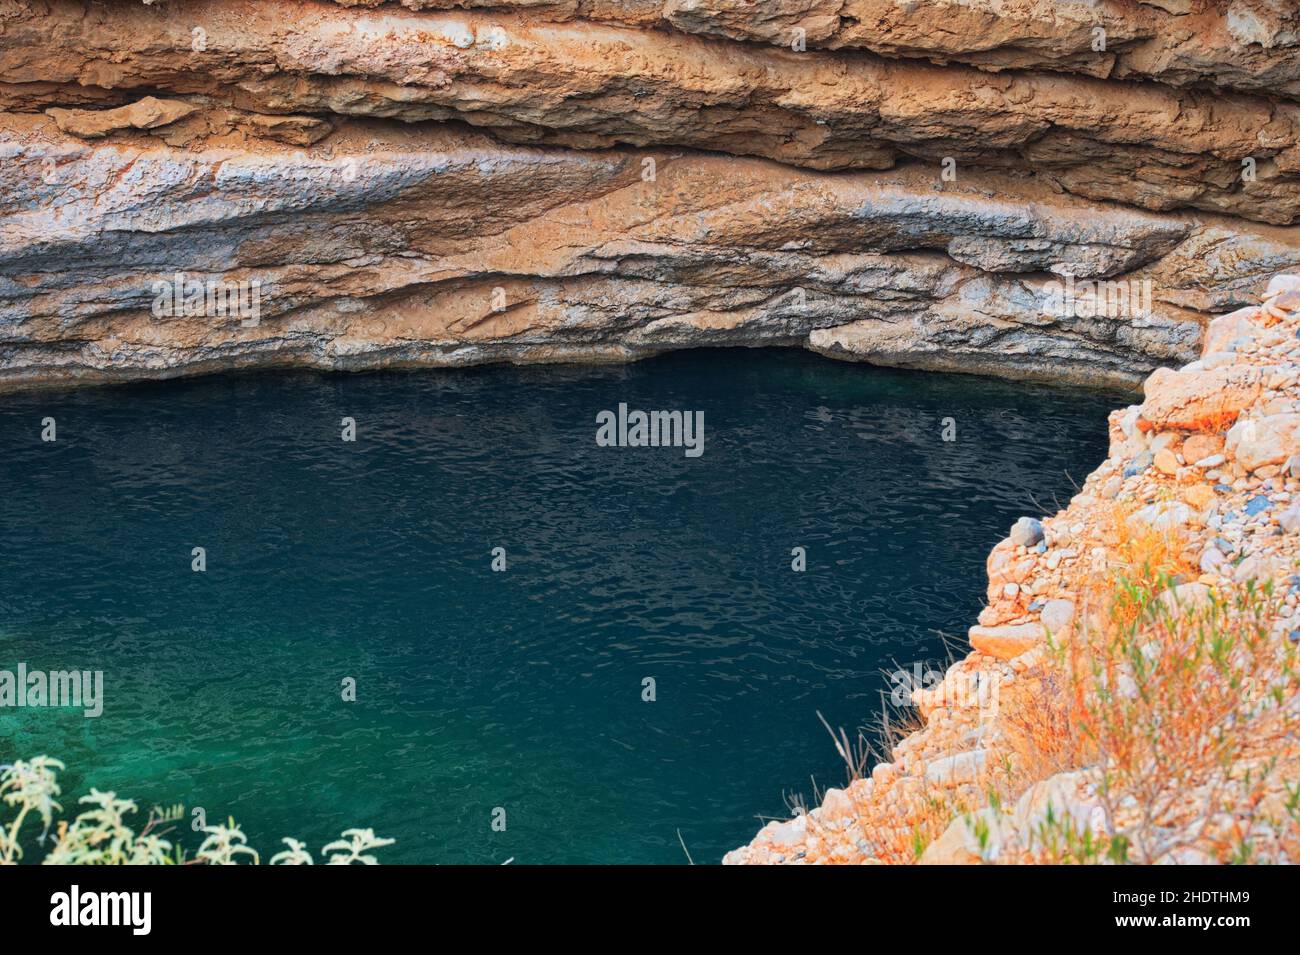 Clear turquoise water in Bimmah sinkhole in Oman Stock Photo